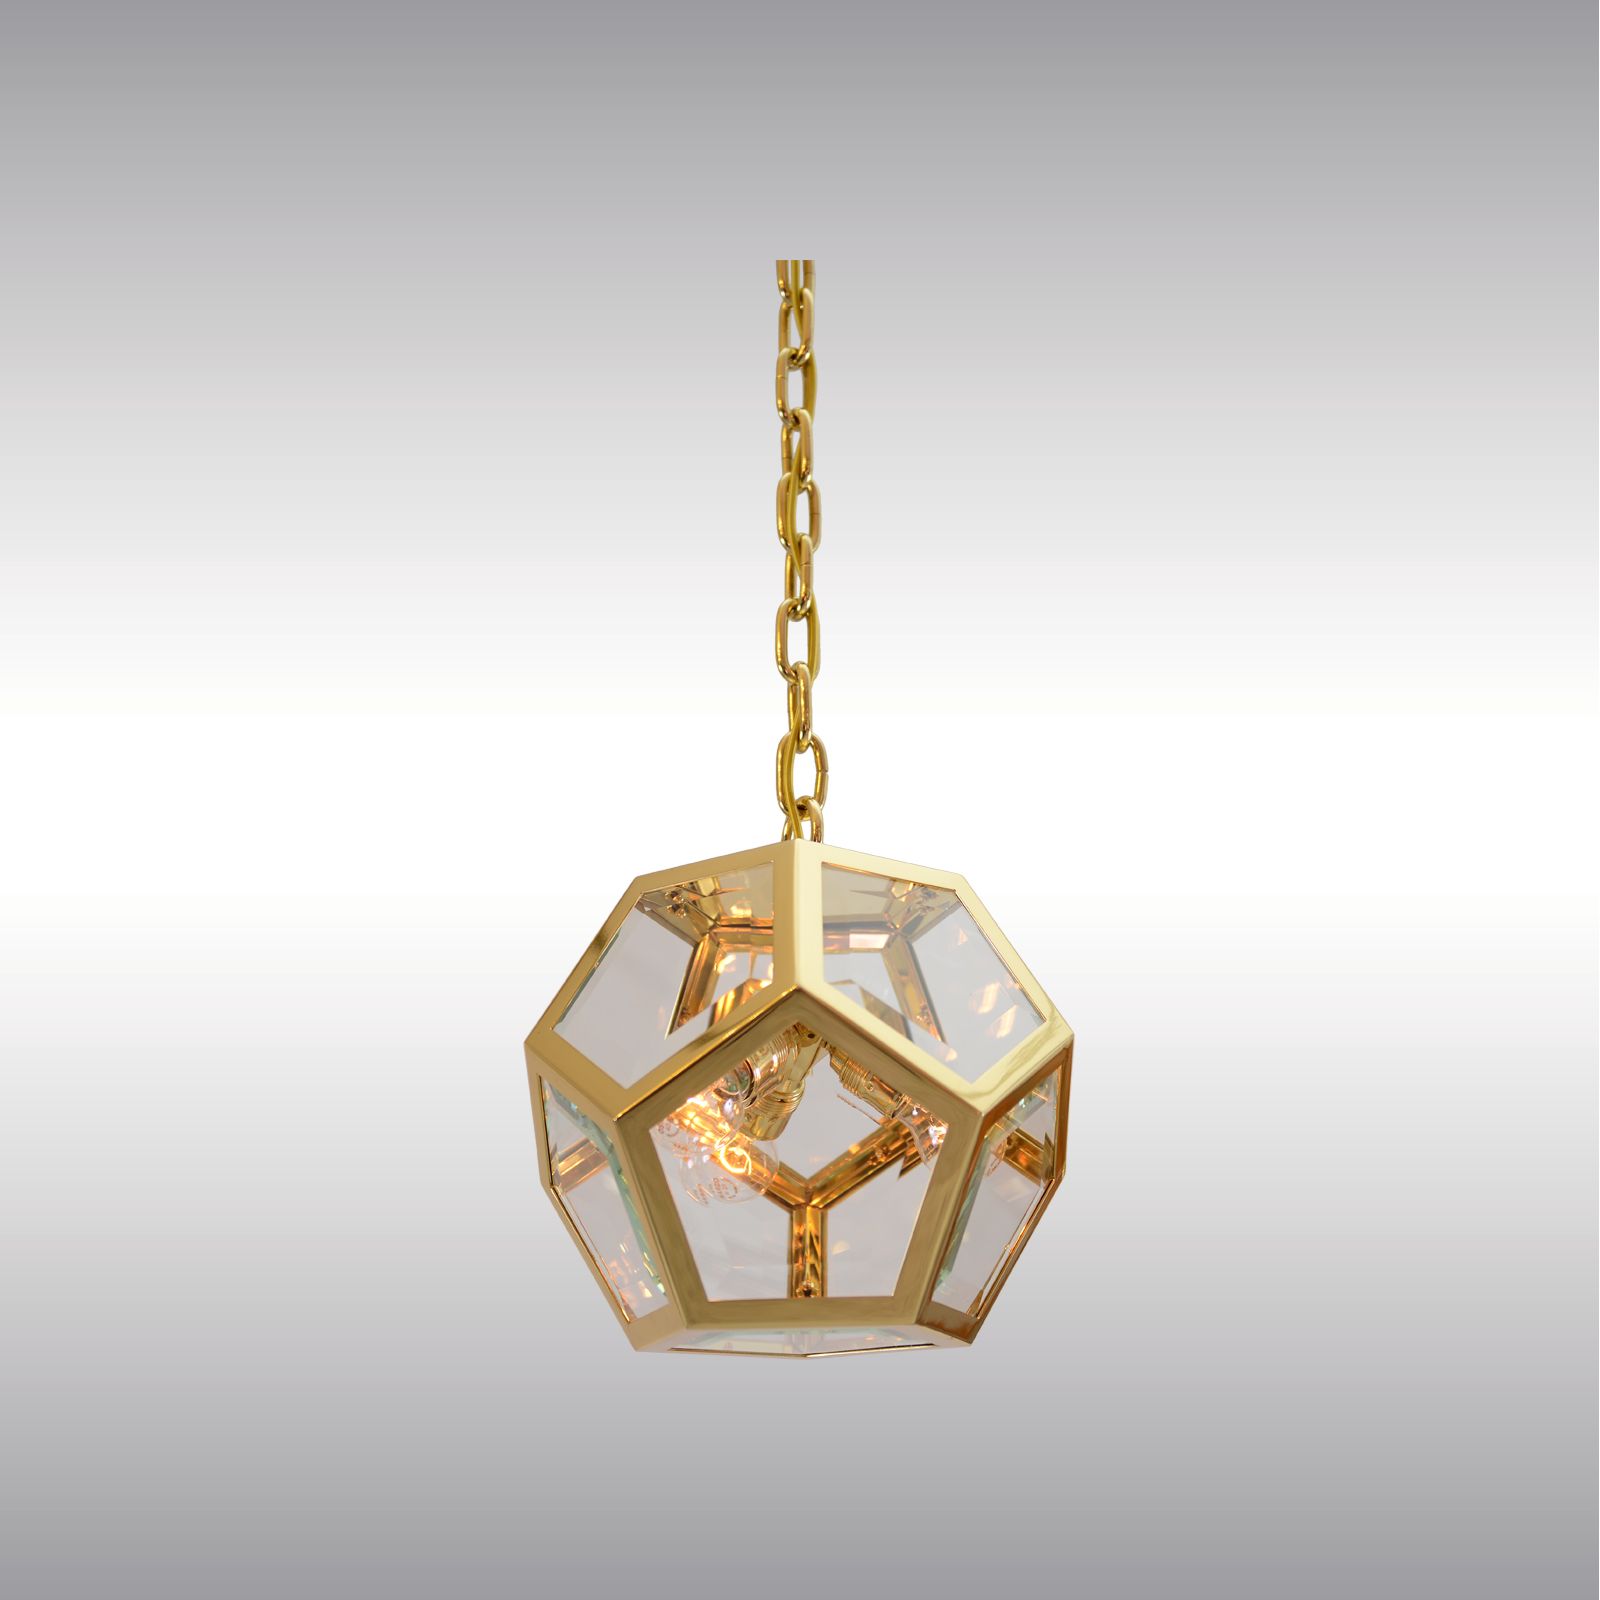 WOKA LAMPS VIENNA - OrderNr.: 21530|Knize Symmetric-35 - Design: Adolf Loos